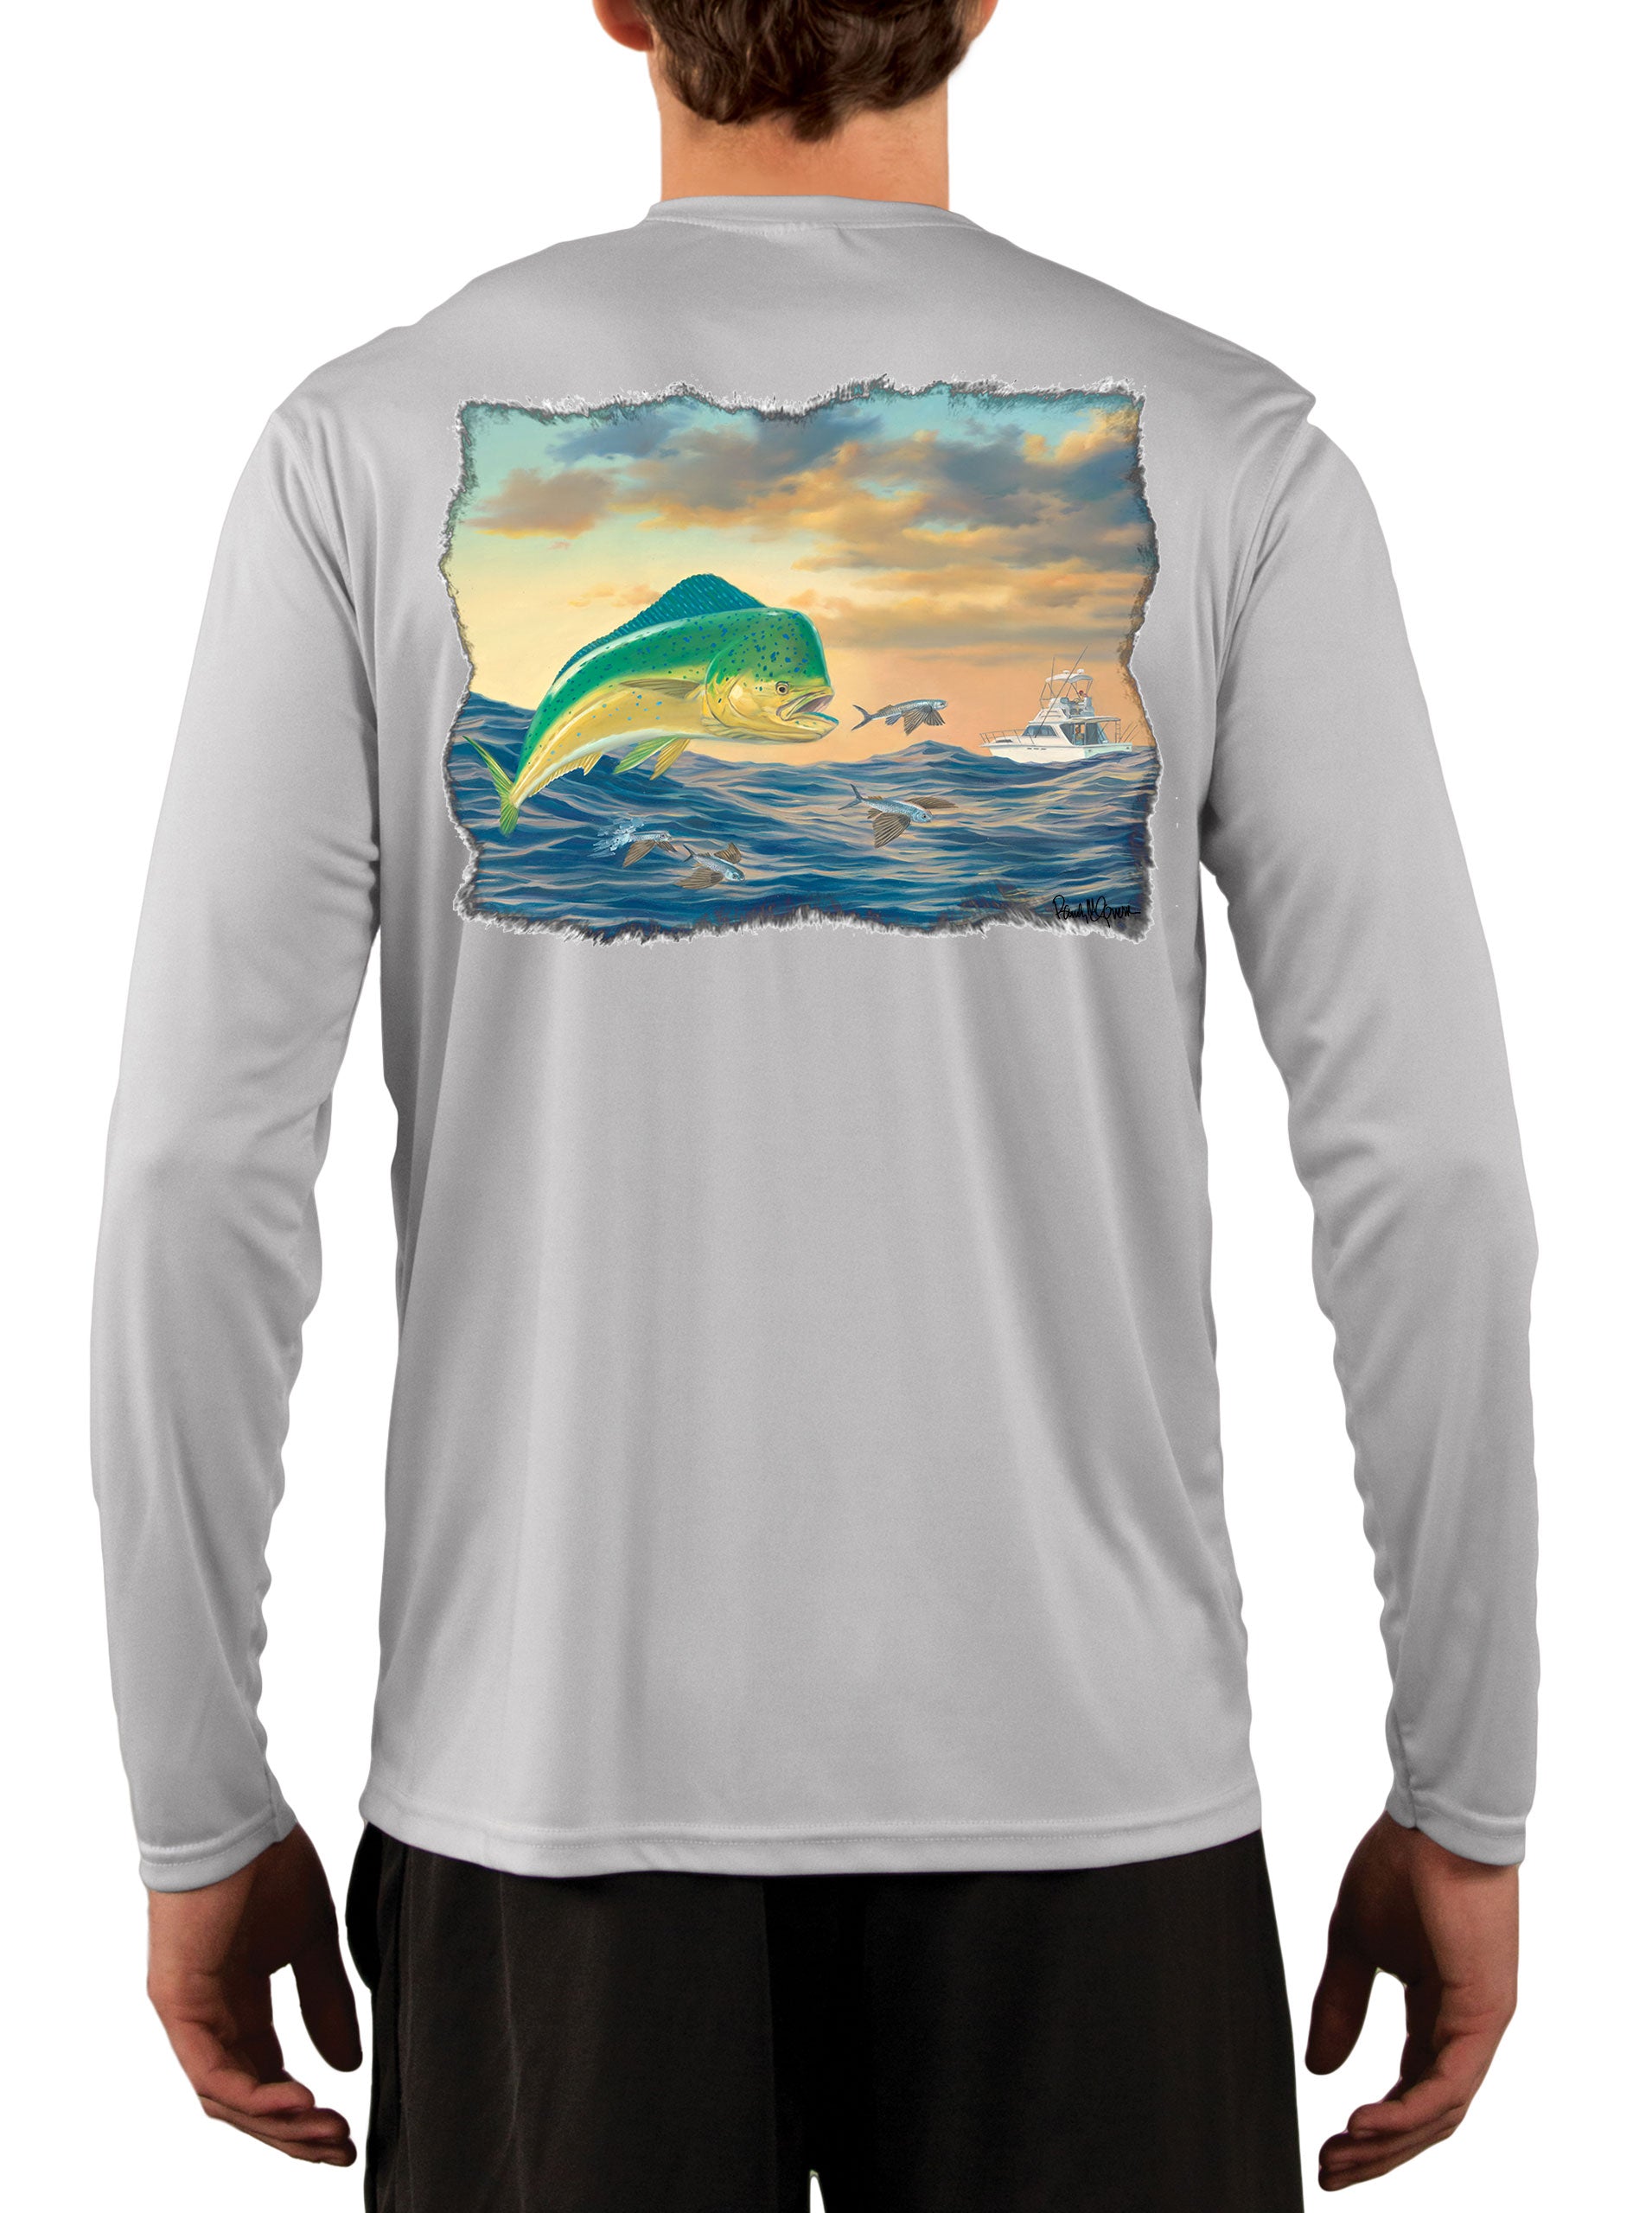 Mahi-mahi with Flying Fish Fishing Shirts for Men Featuring Dorado / Dolphinfish Art by Randy McGovern 3XL / Pearl Grey